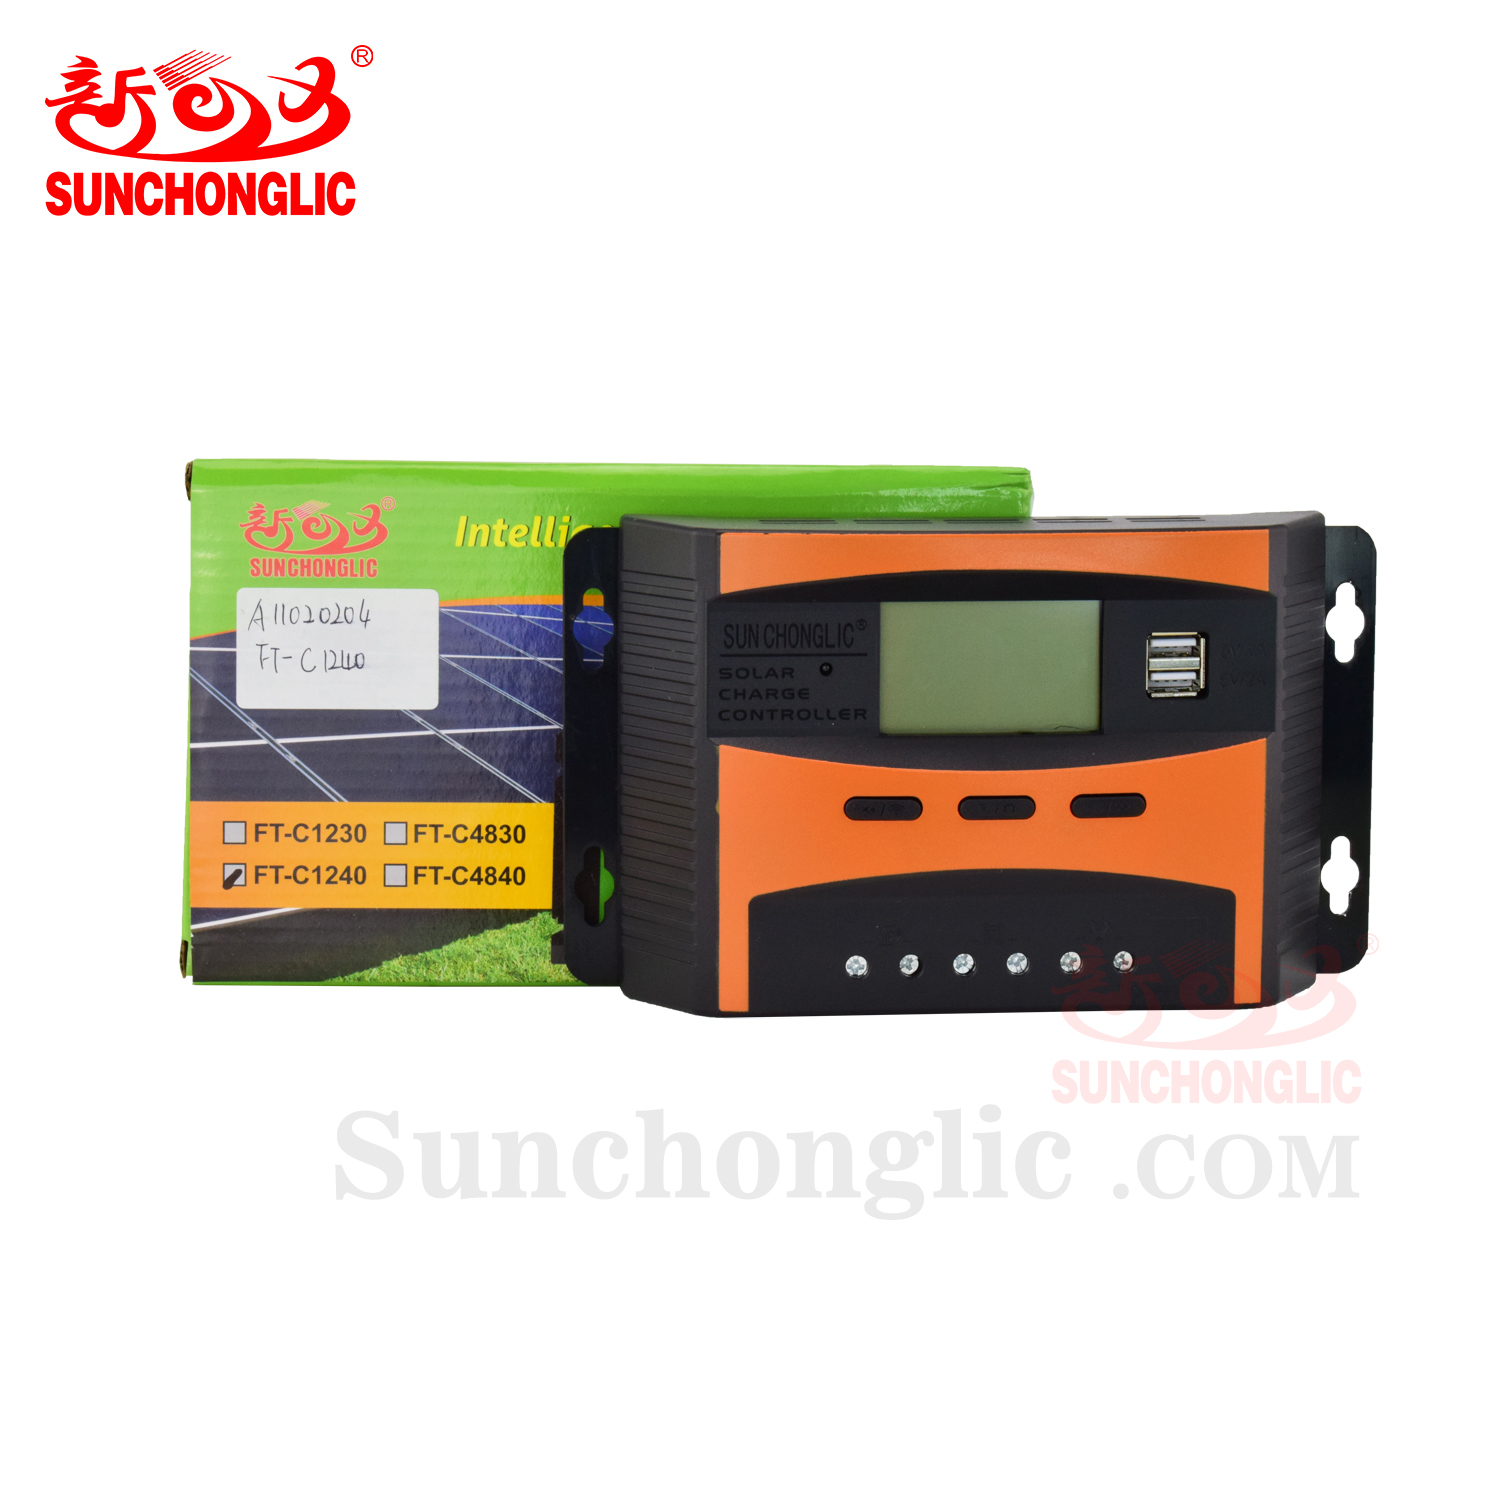 Sunchonglic 12V 24V 40A LCD display manual PWM solar charge regulator solar controller